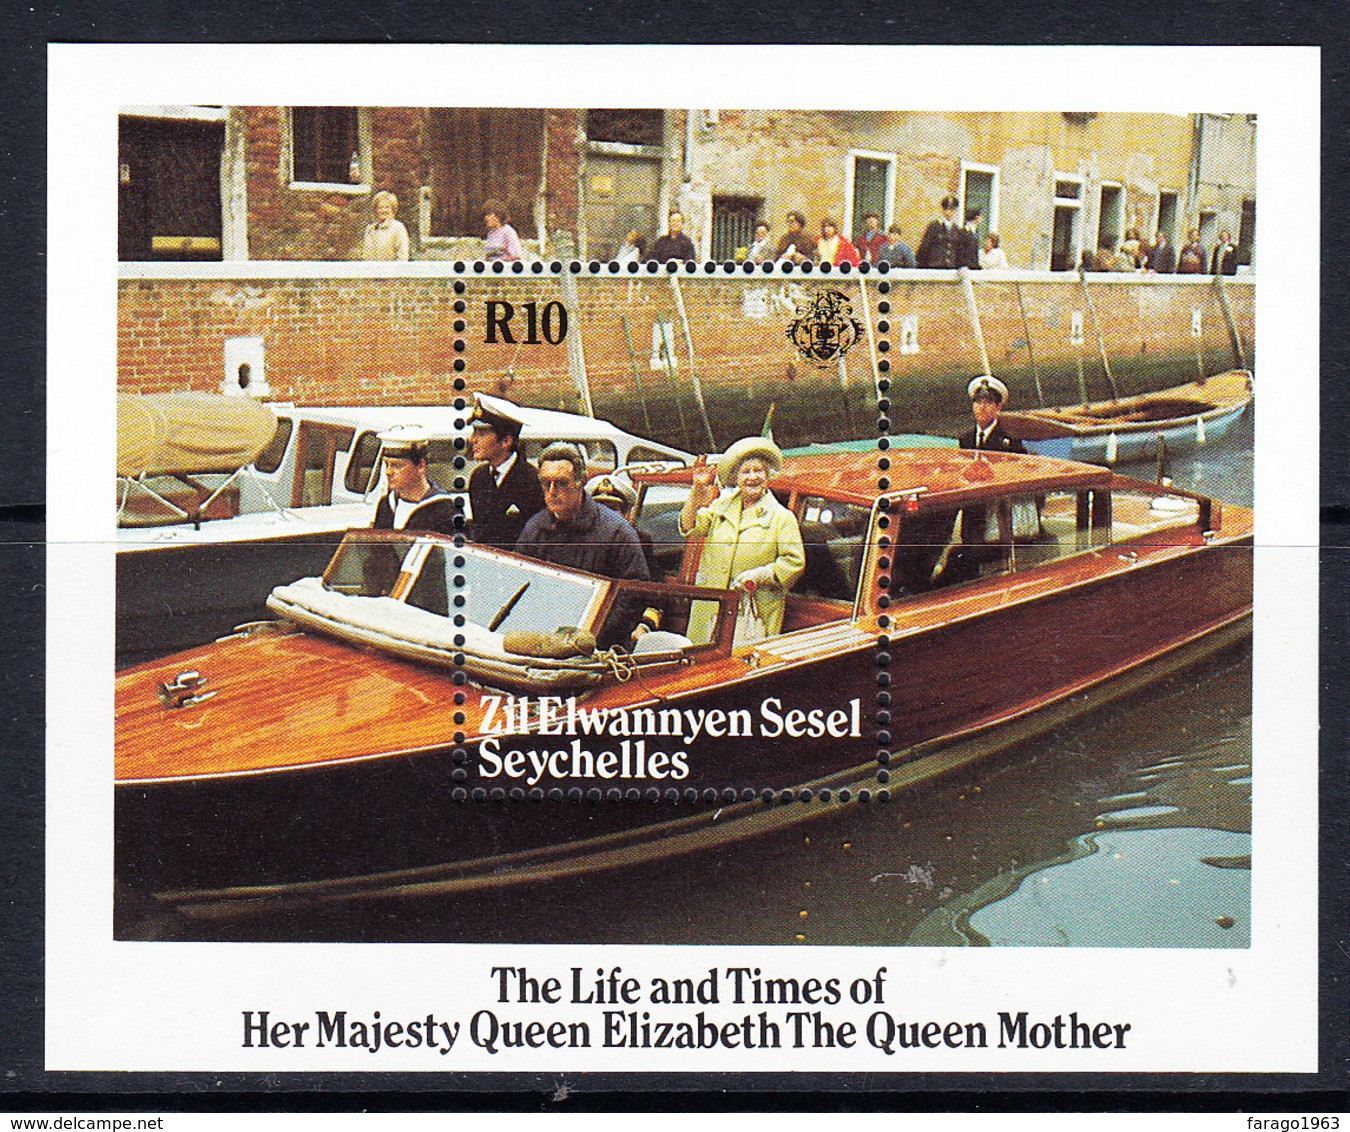 1985 Seychelles Zil Elwannyen Sesel Queen Mother Boat JOINT ISSUE Souvenir Sheet MNH - Seychelles (1976-...)